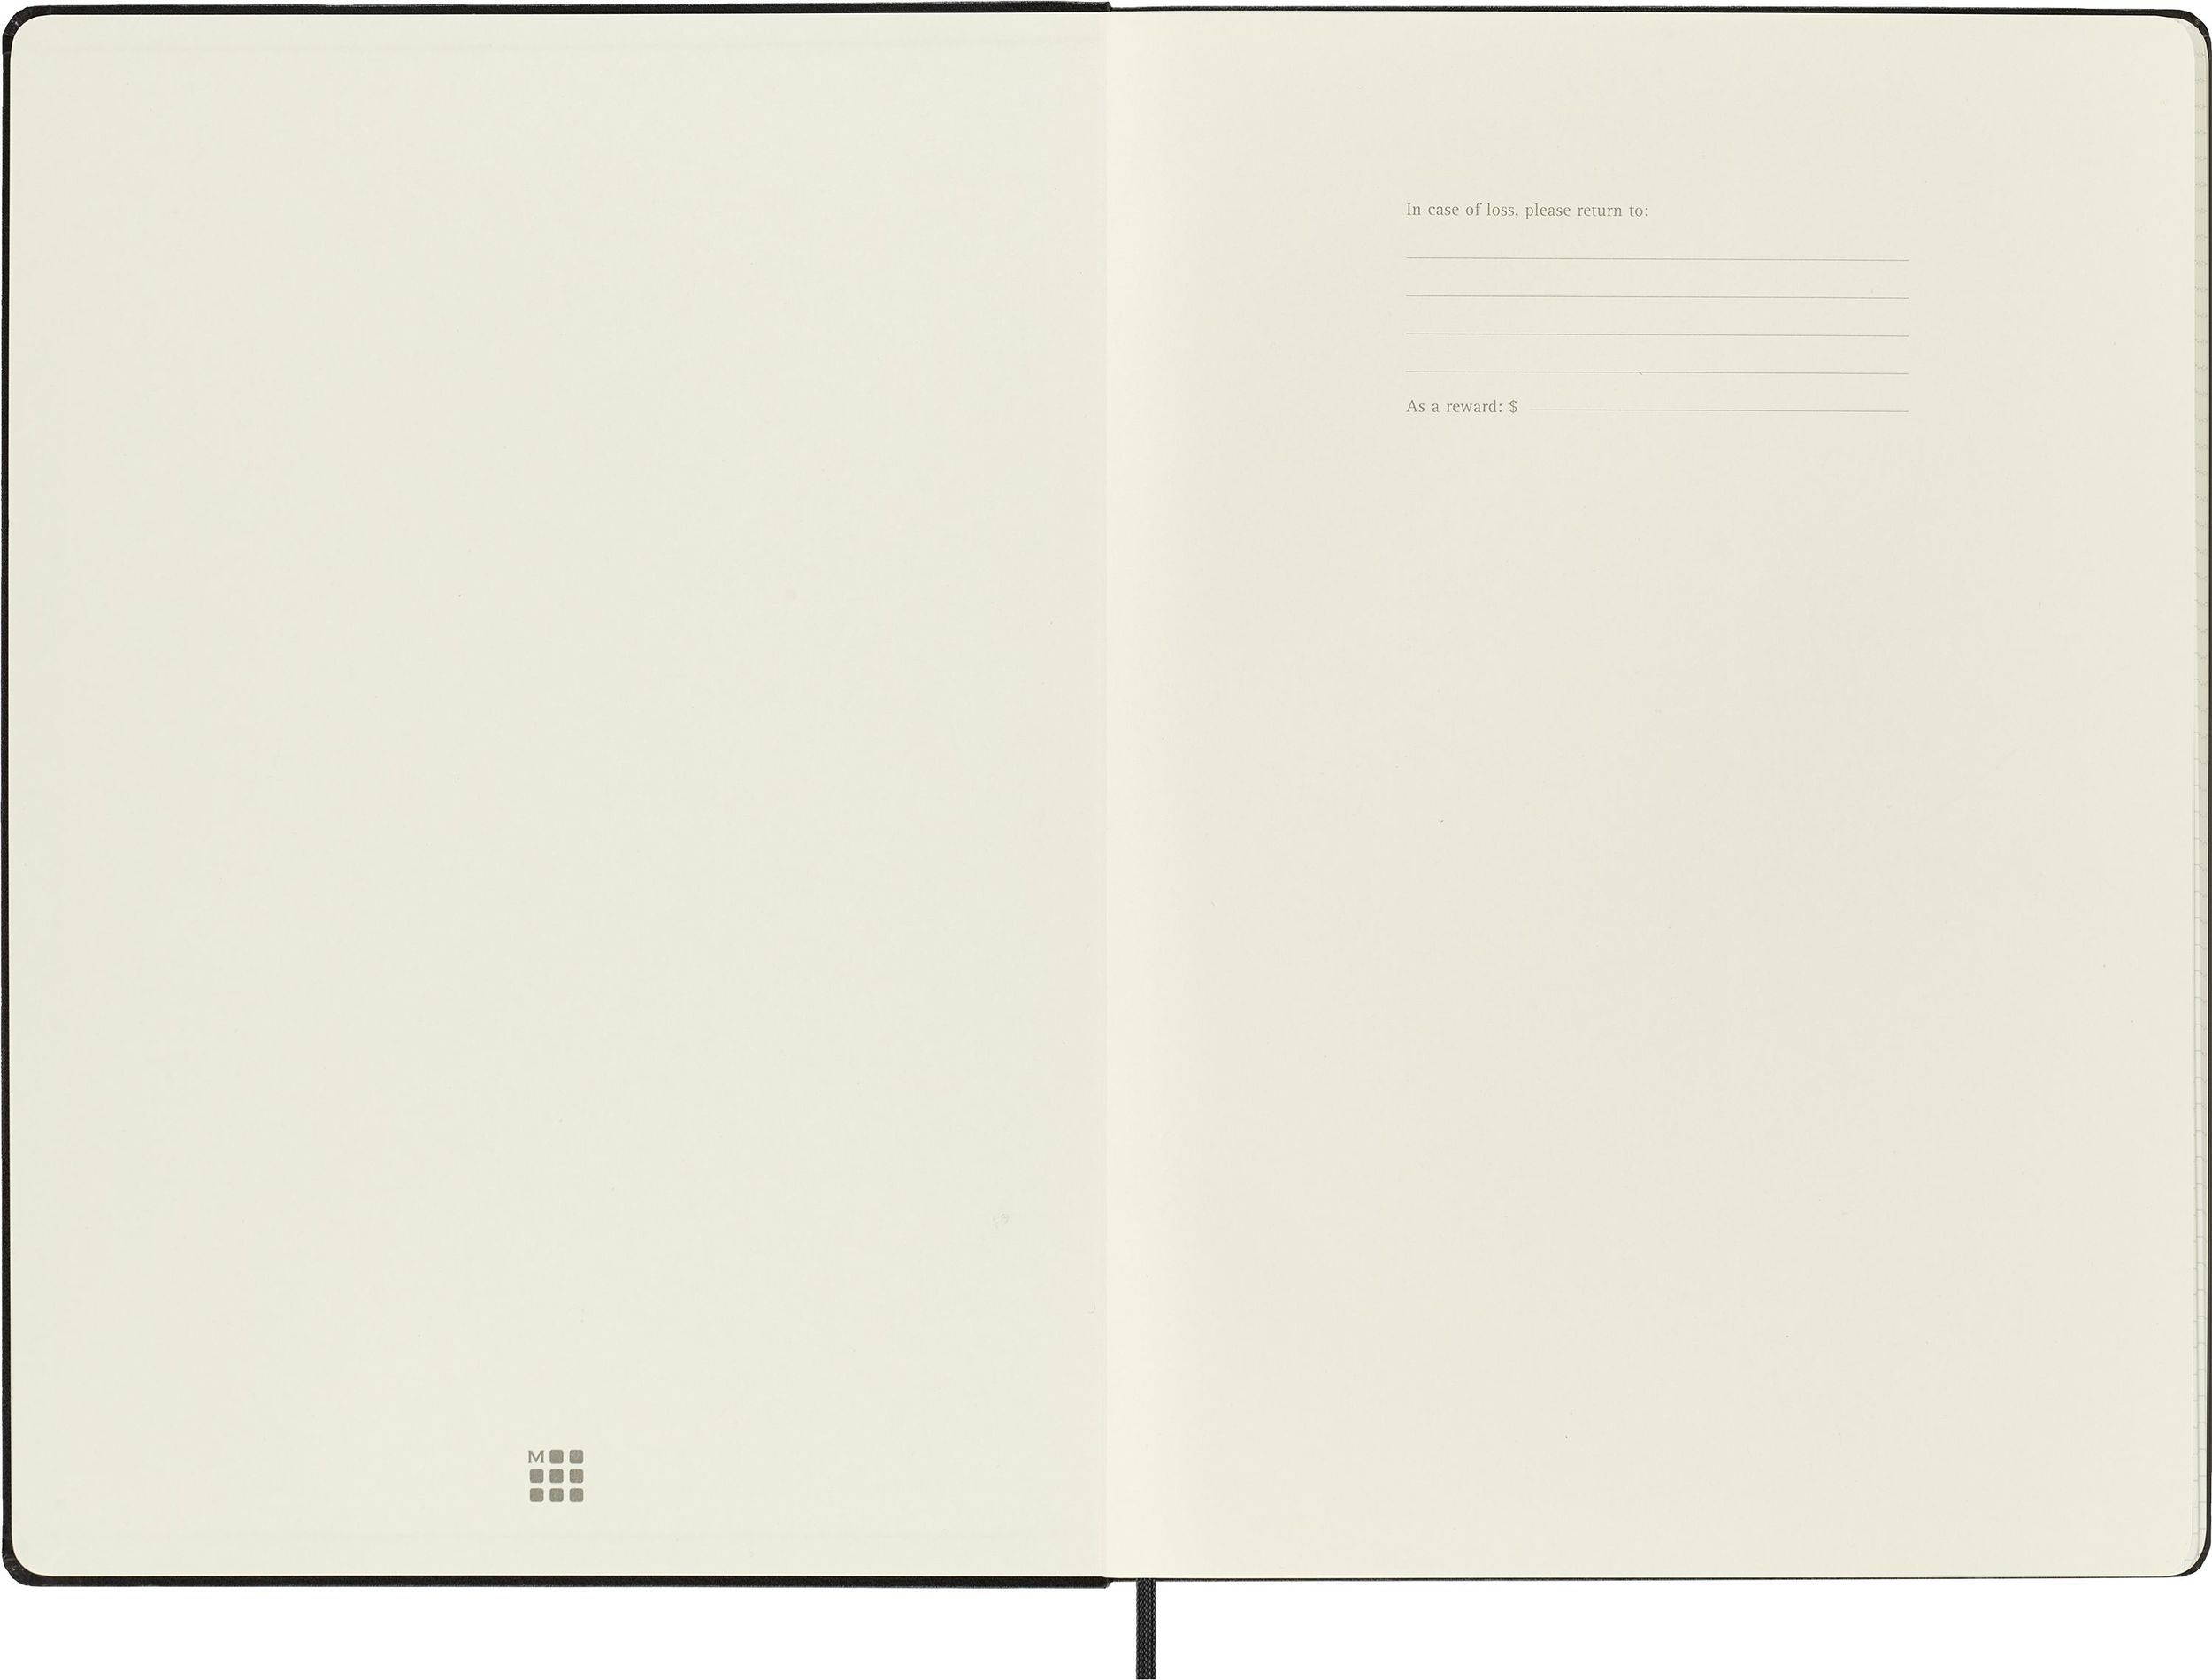 Moleskine Classic Plain Paper Notebook A4 Size, Black Soft Cover